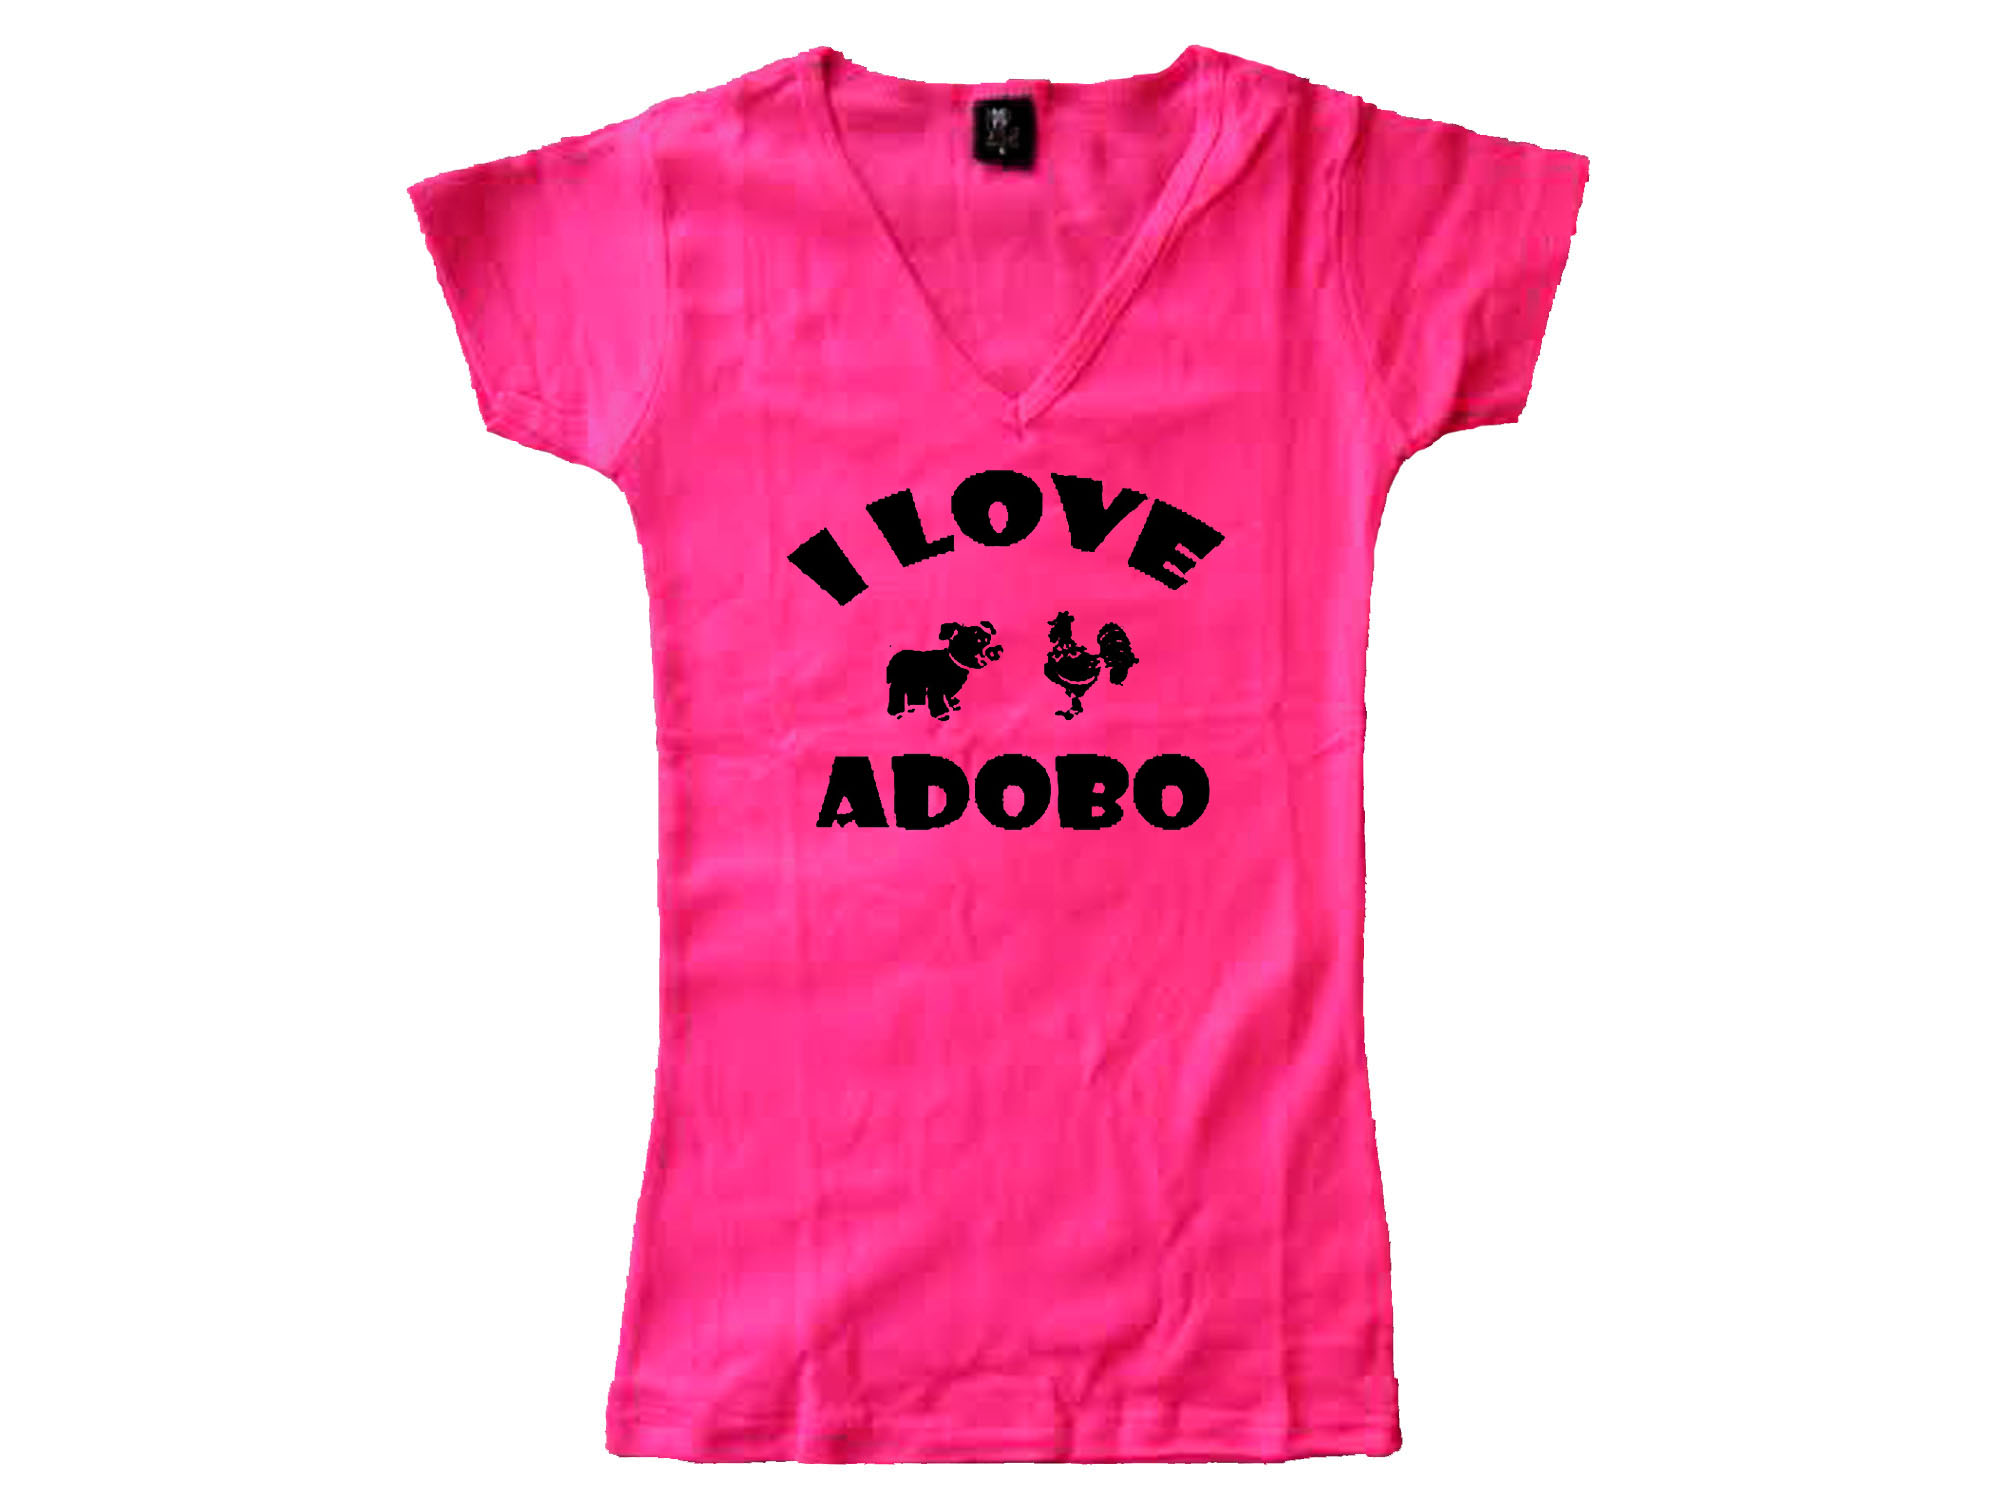 I love adobo - national Filipino food v neck pink t-shirt